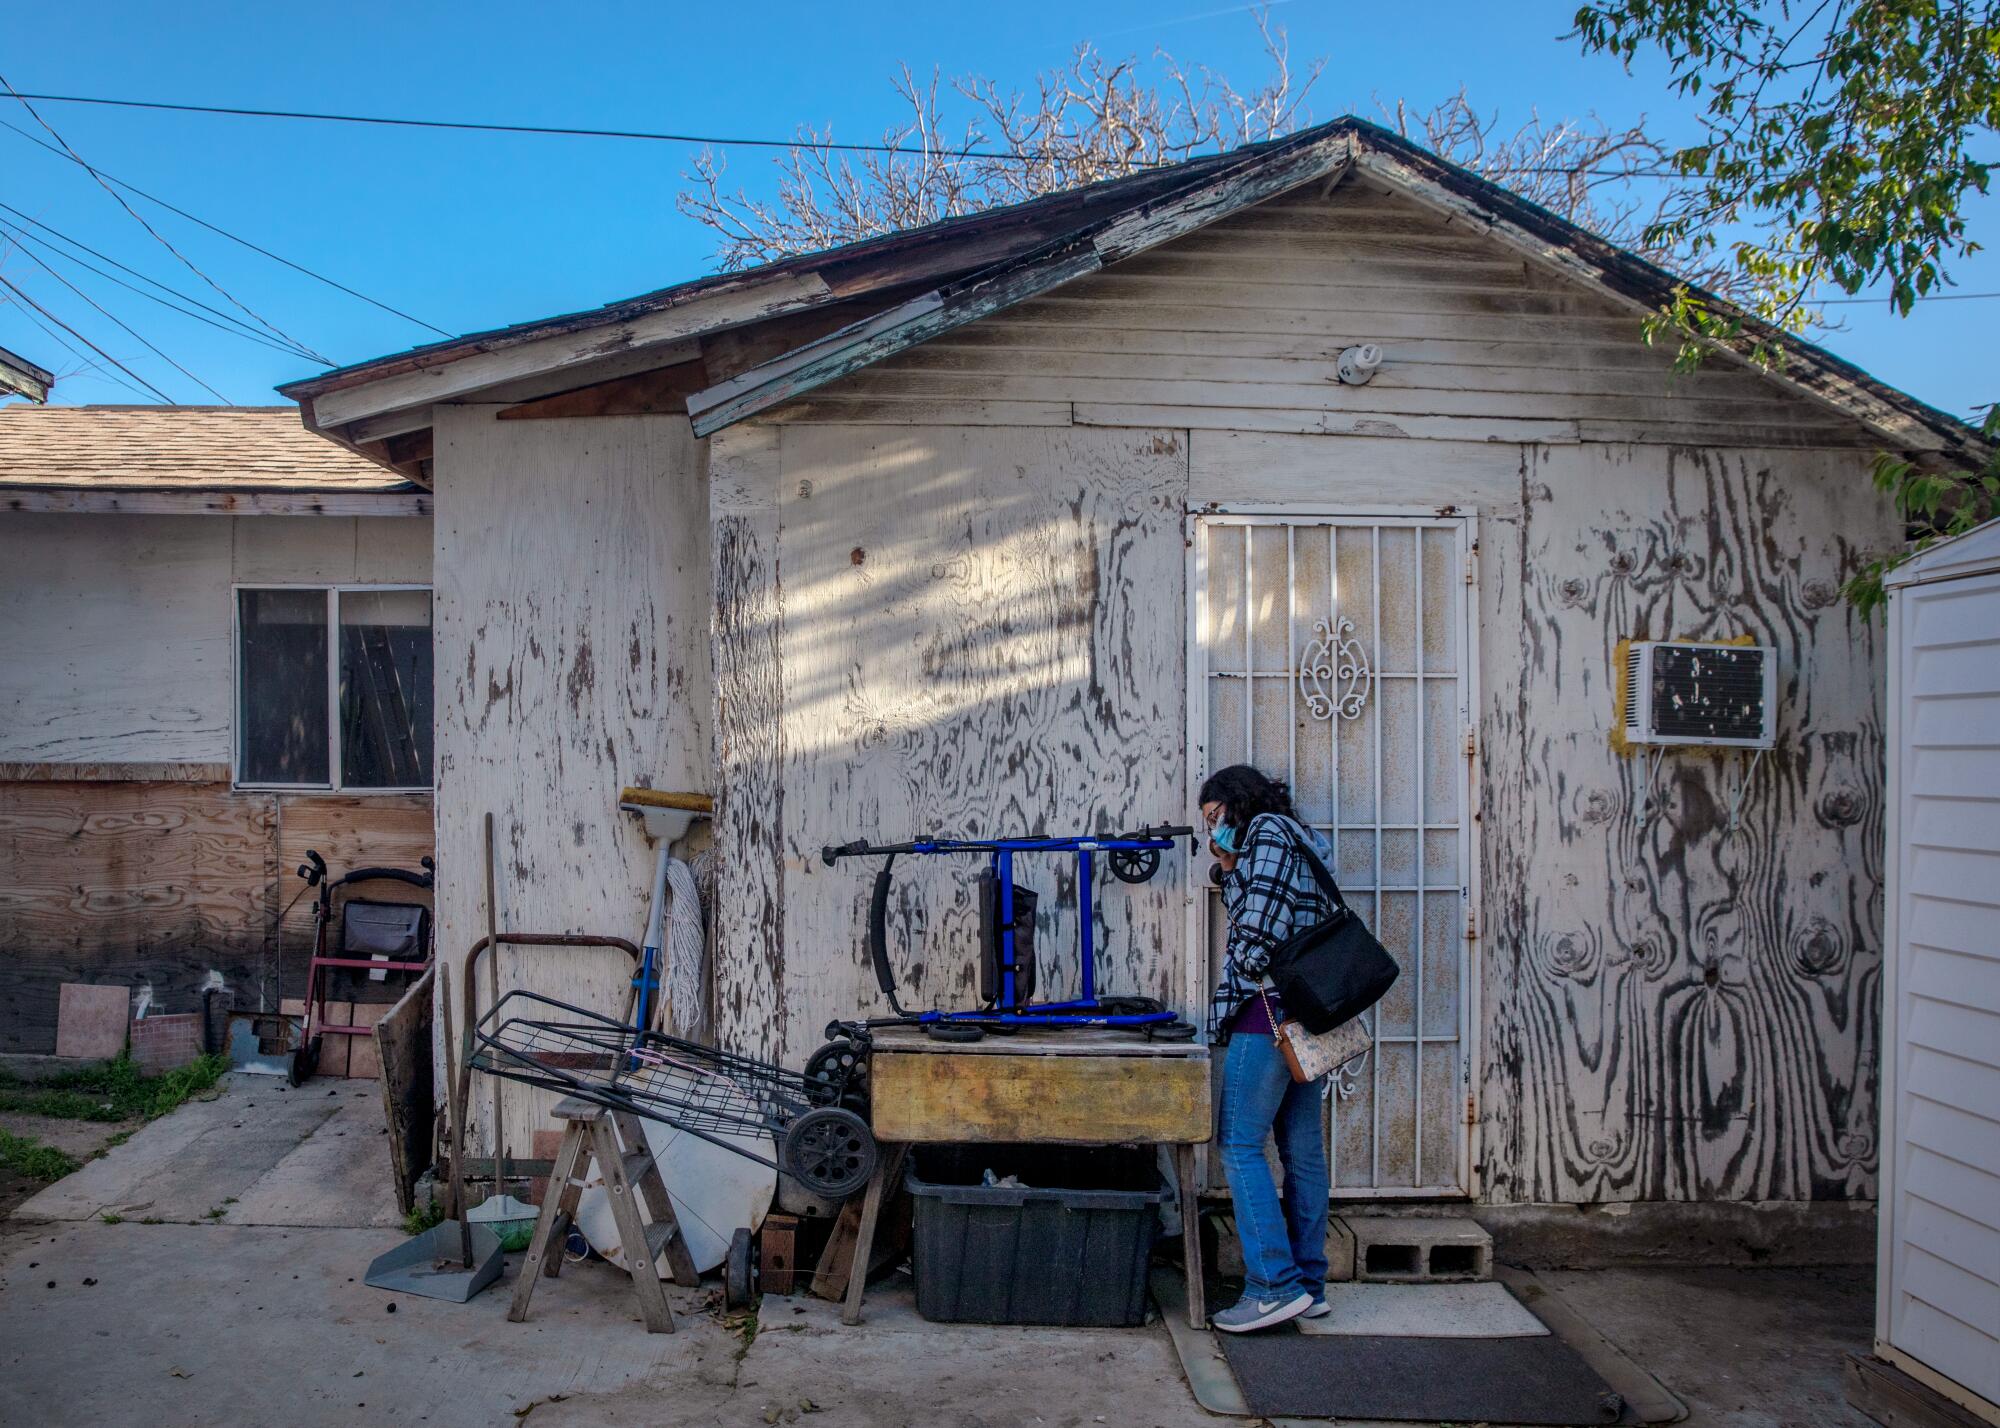 Maria Diaz knocks at the door of a backyard home